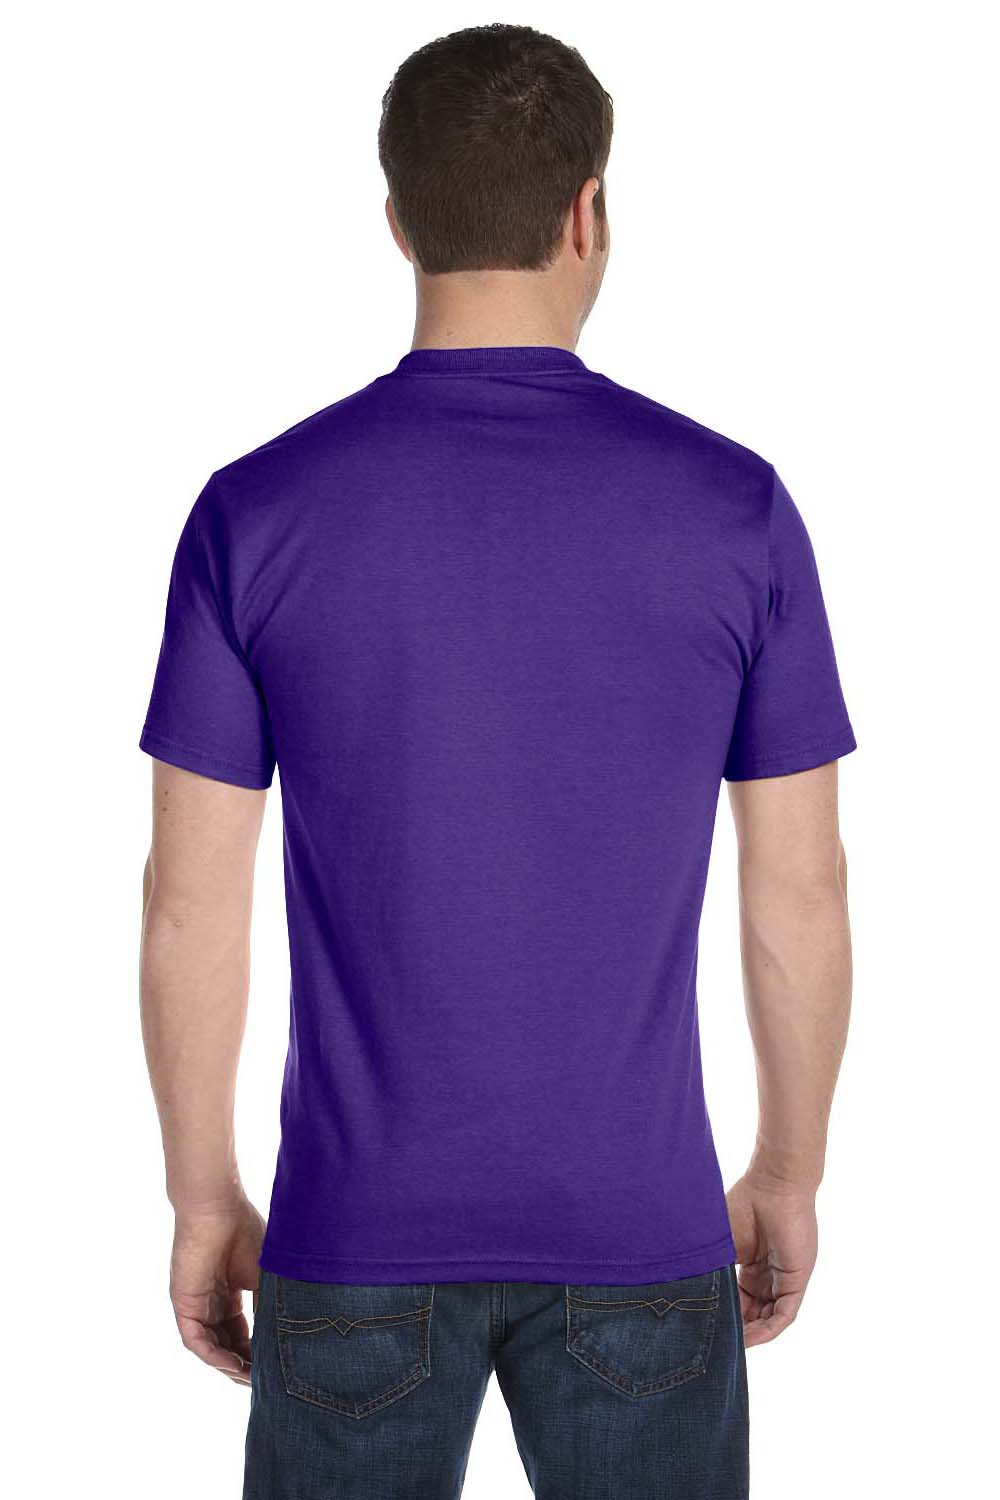 Hanes 5280 Mens ComfortSoft Short Sleeve Crewneck T-Shirt Purple Back